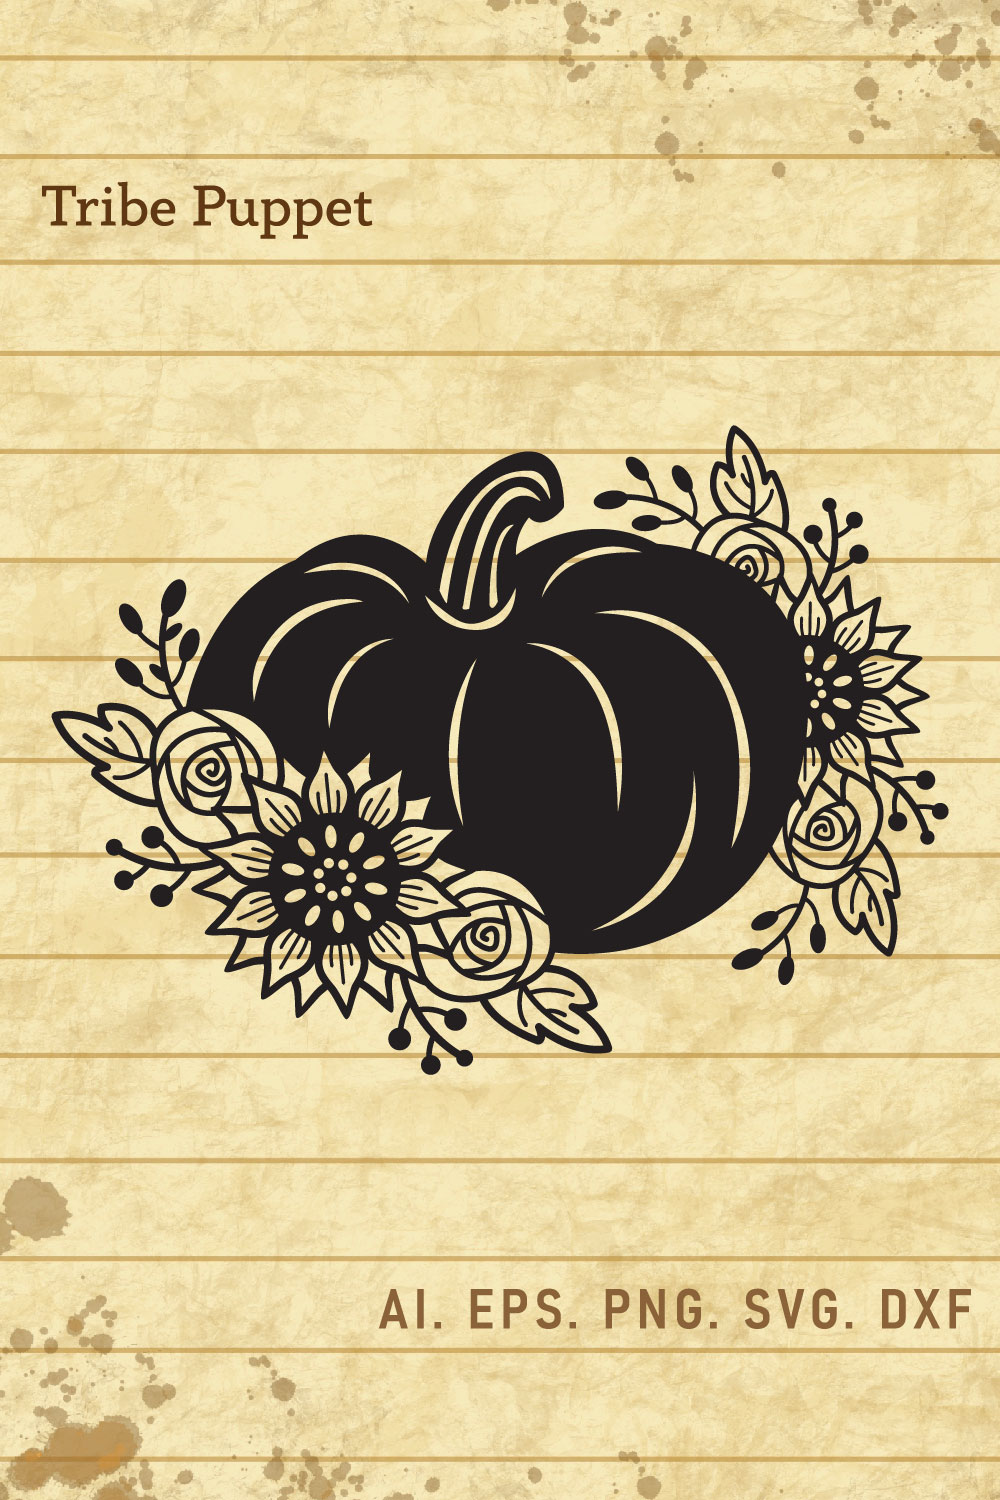 Boho Pumpkin pinterest preview image.